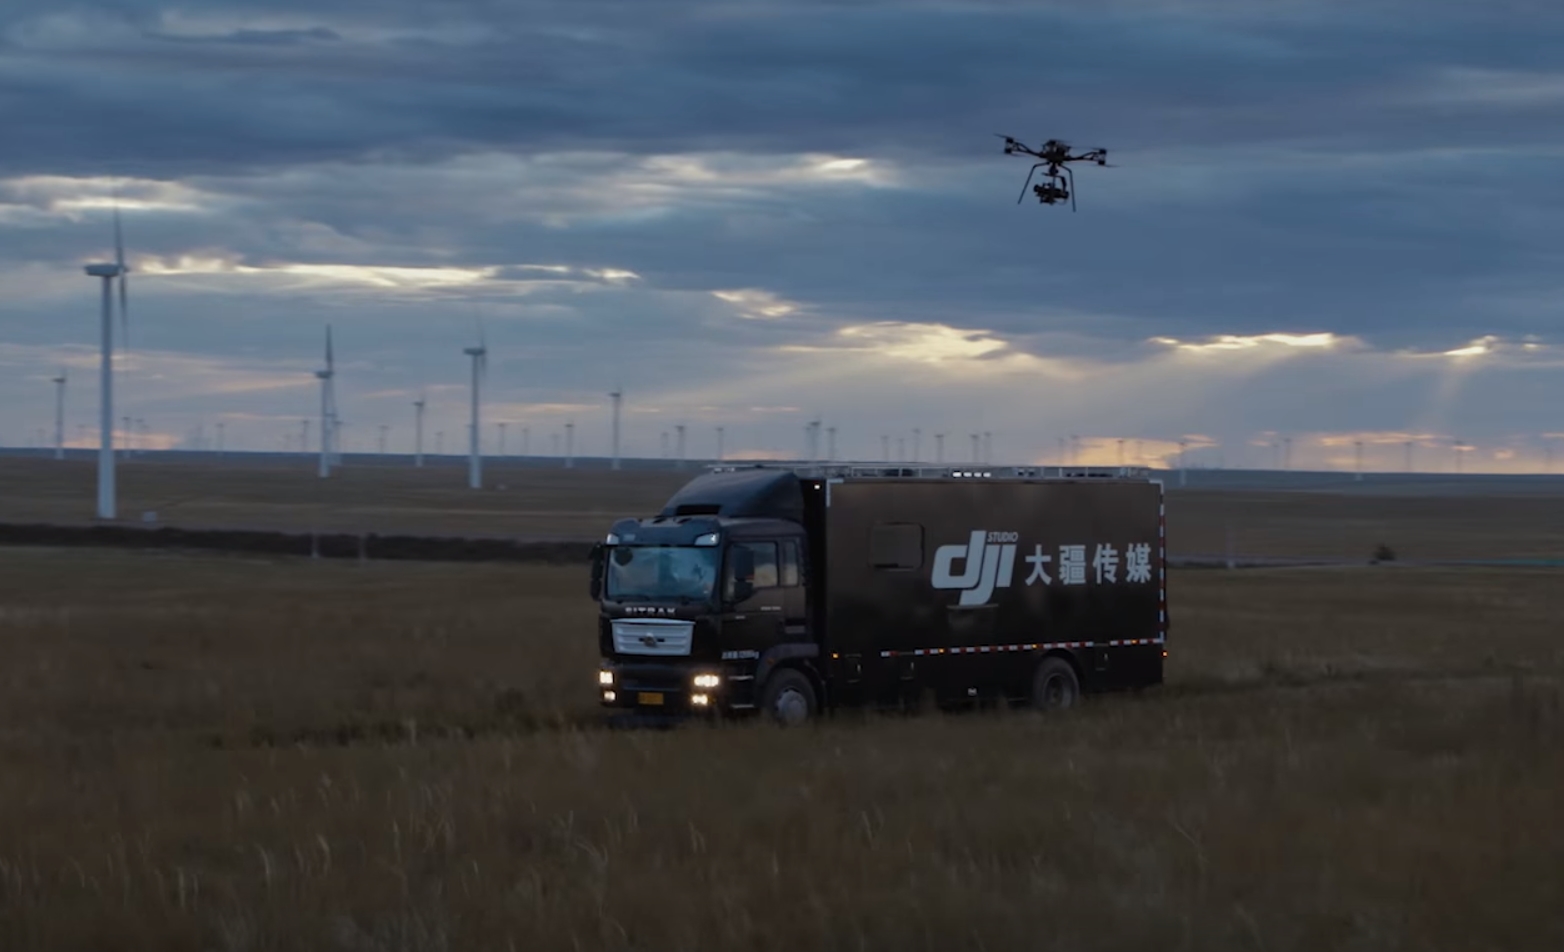 DJI Storm drone - professionel DJI drone service til filmindsutrien